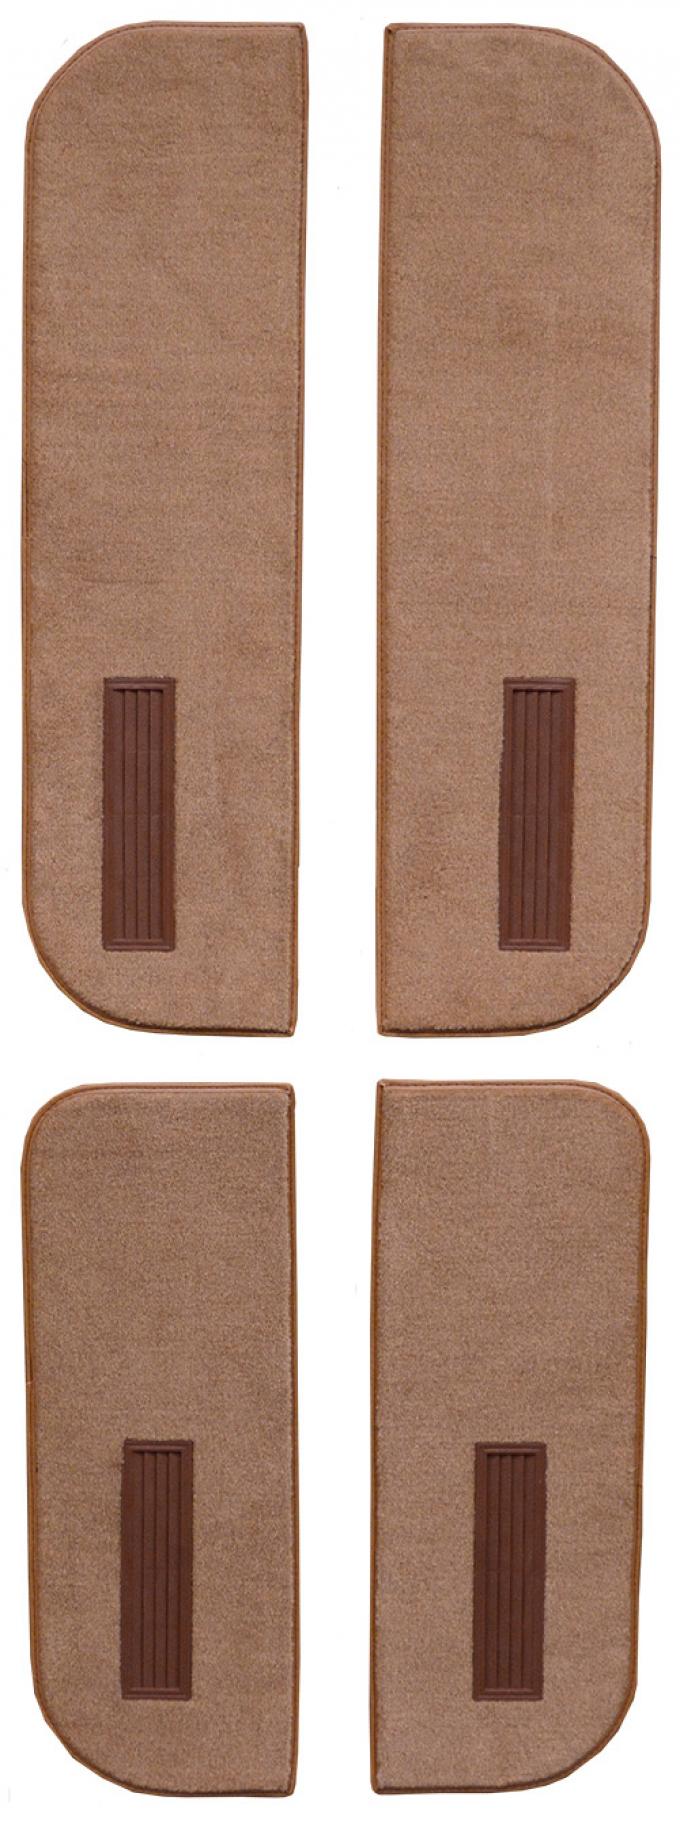 ACC 1975-1978 GMC C15 Suburban Door Panel Inserts on Cardboard w/Vents 4pc Cutpile Carpet